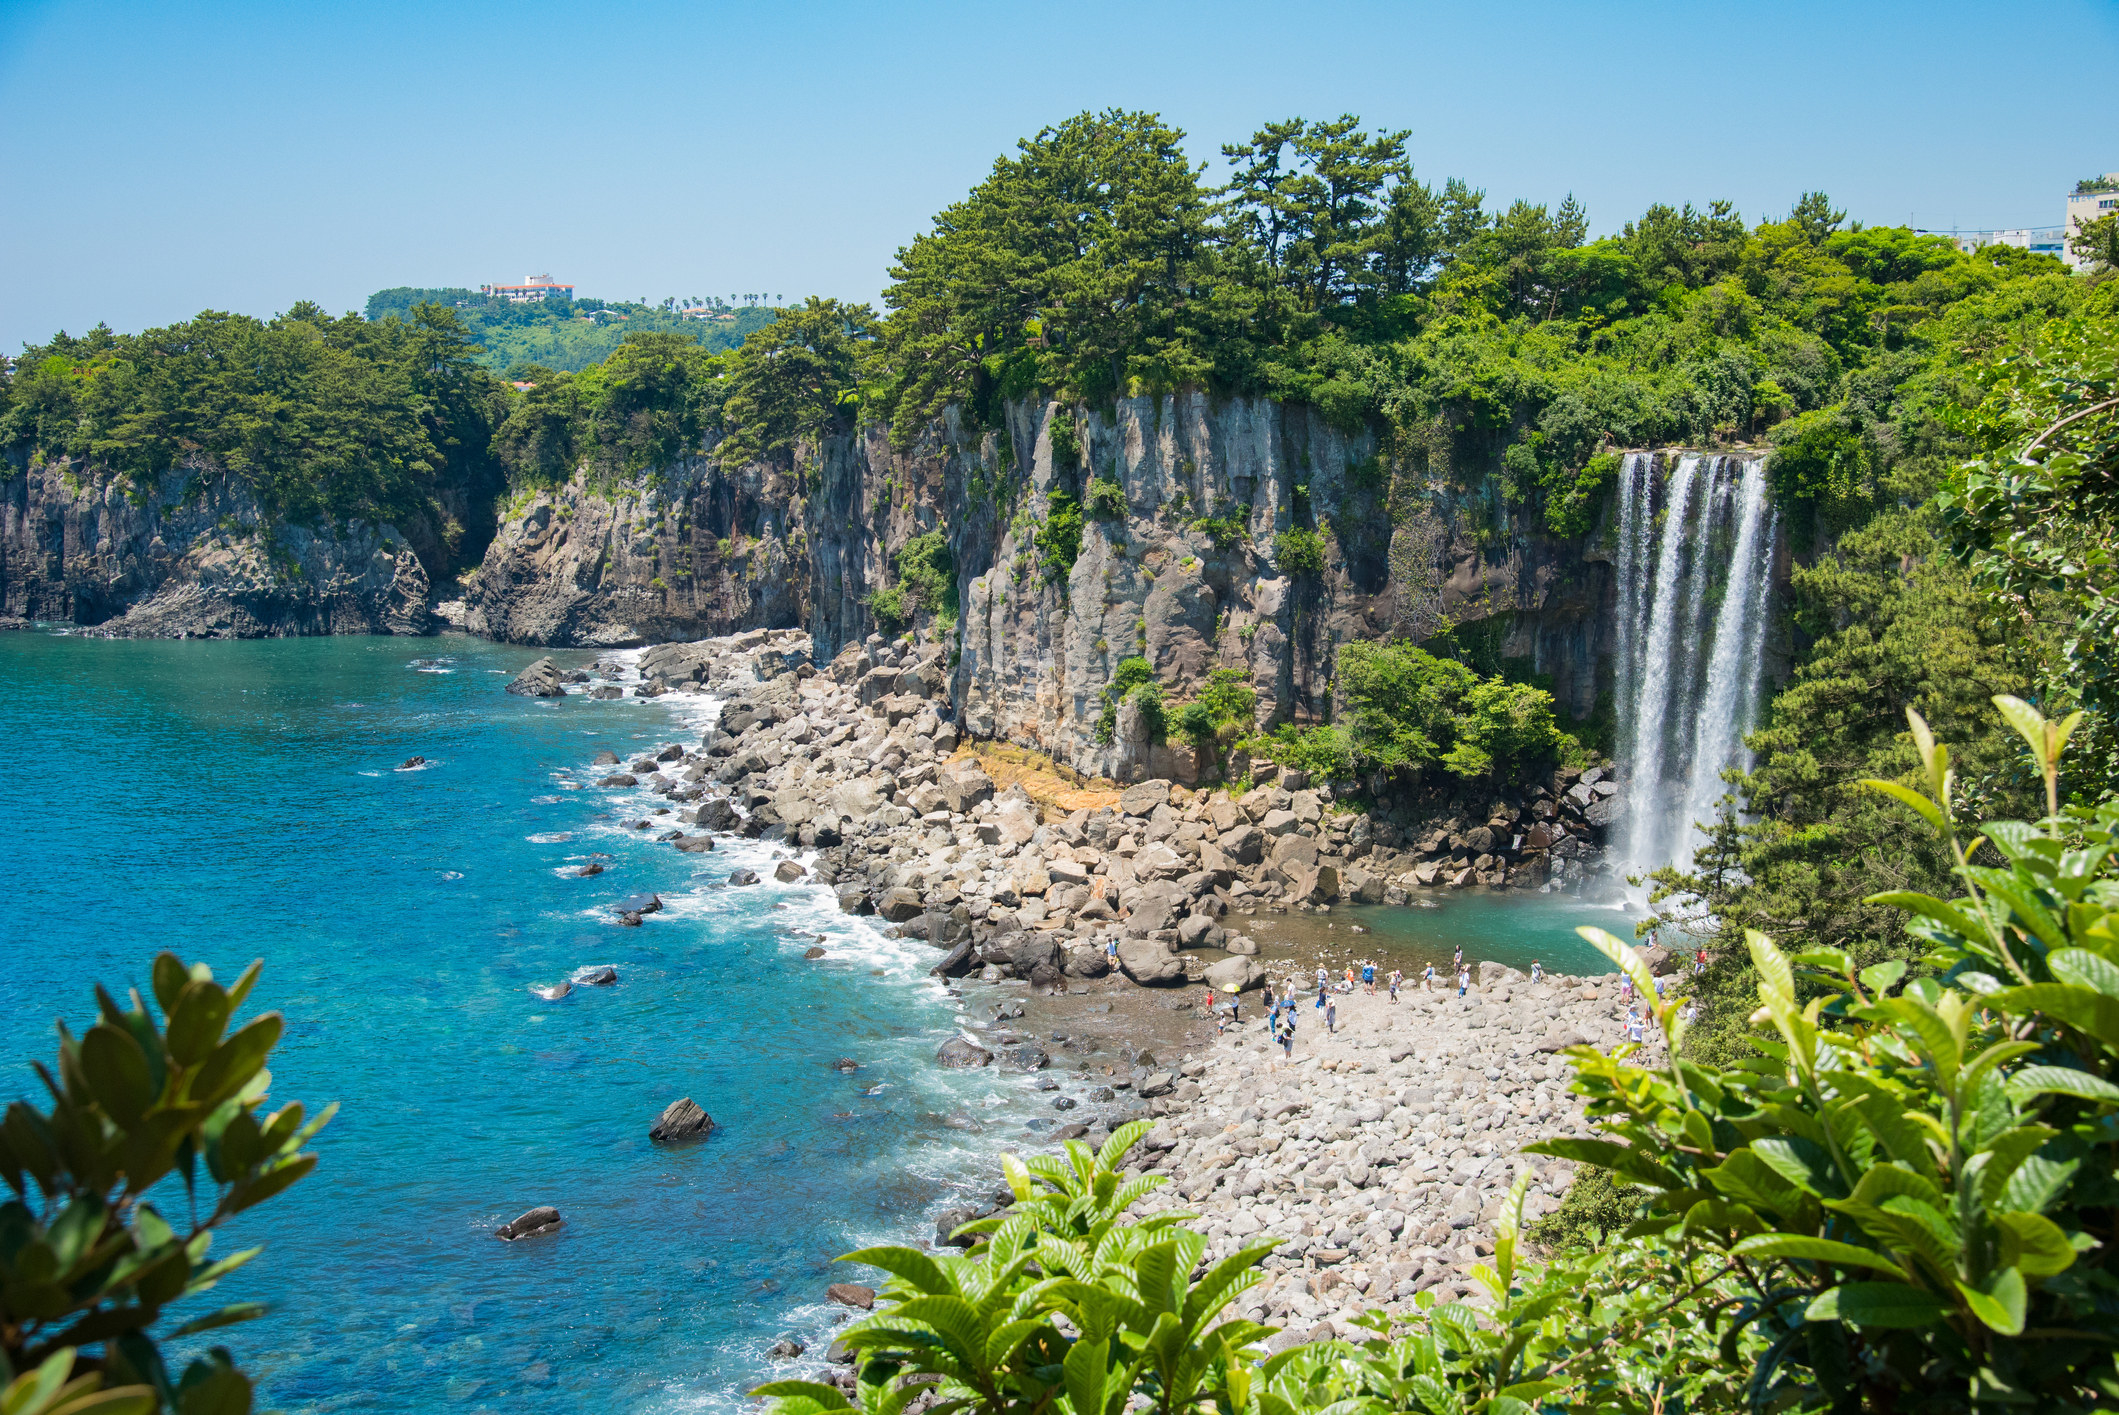 A waterfall in Jeju Island.